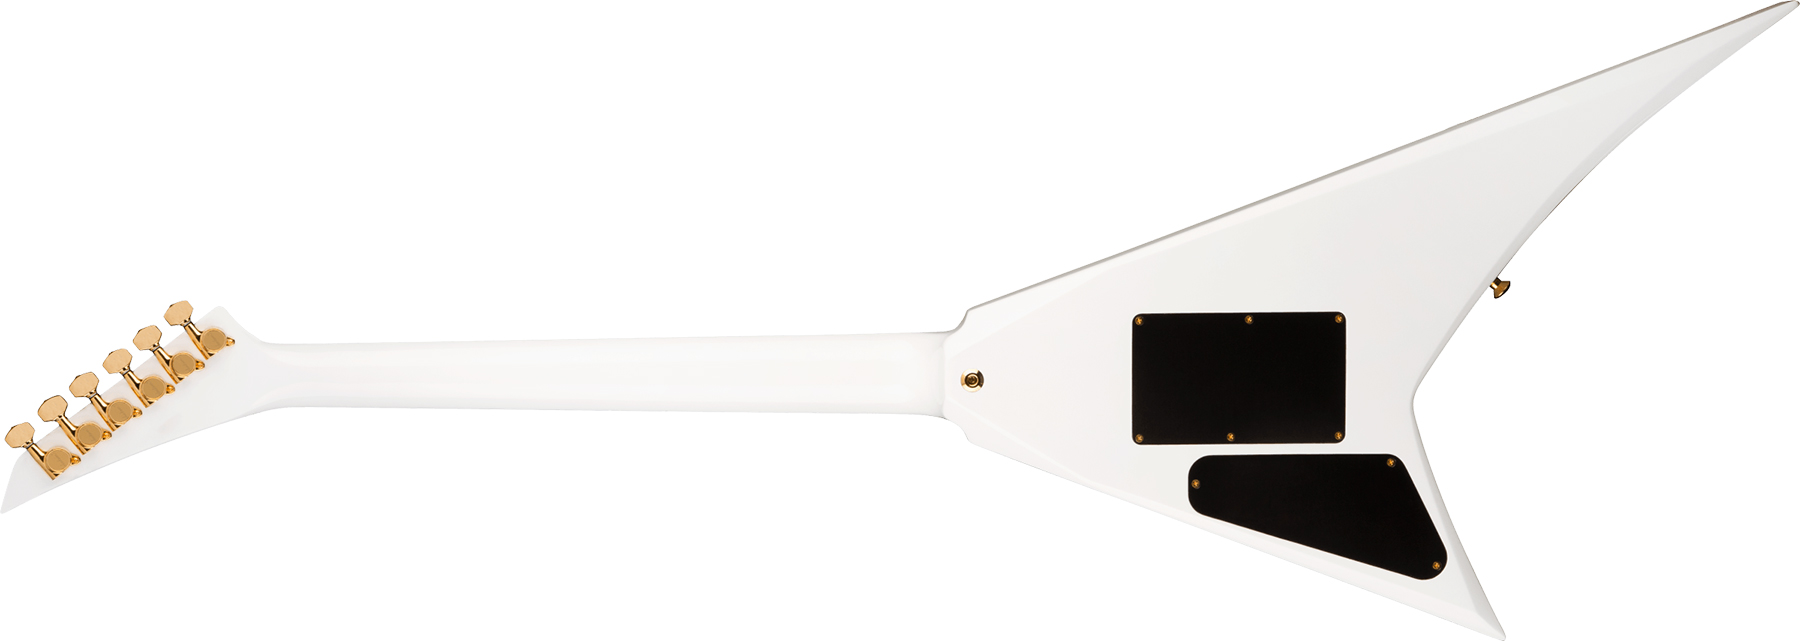 Jackson Rhoads Rr24 Hs Concept Hst Seymour Duncan Fr Eb - White With Black Pinstripes - E-Gitarre aus Metall - Variation 1